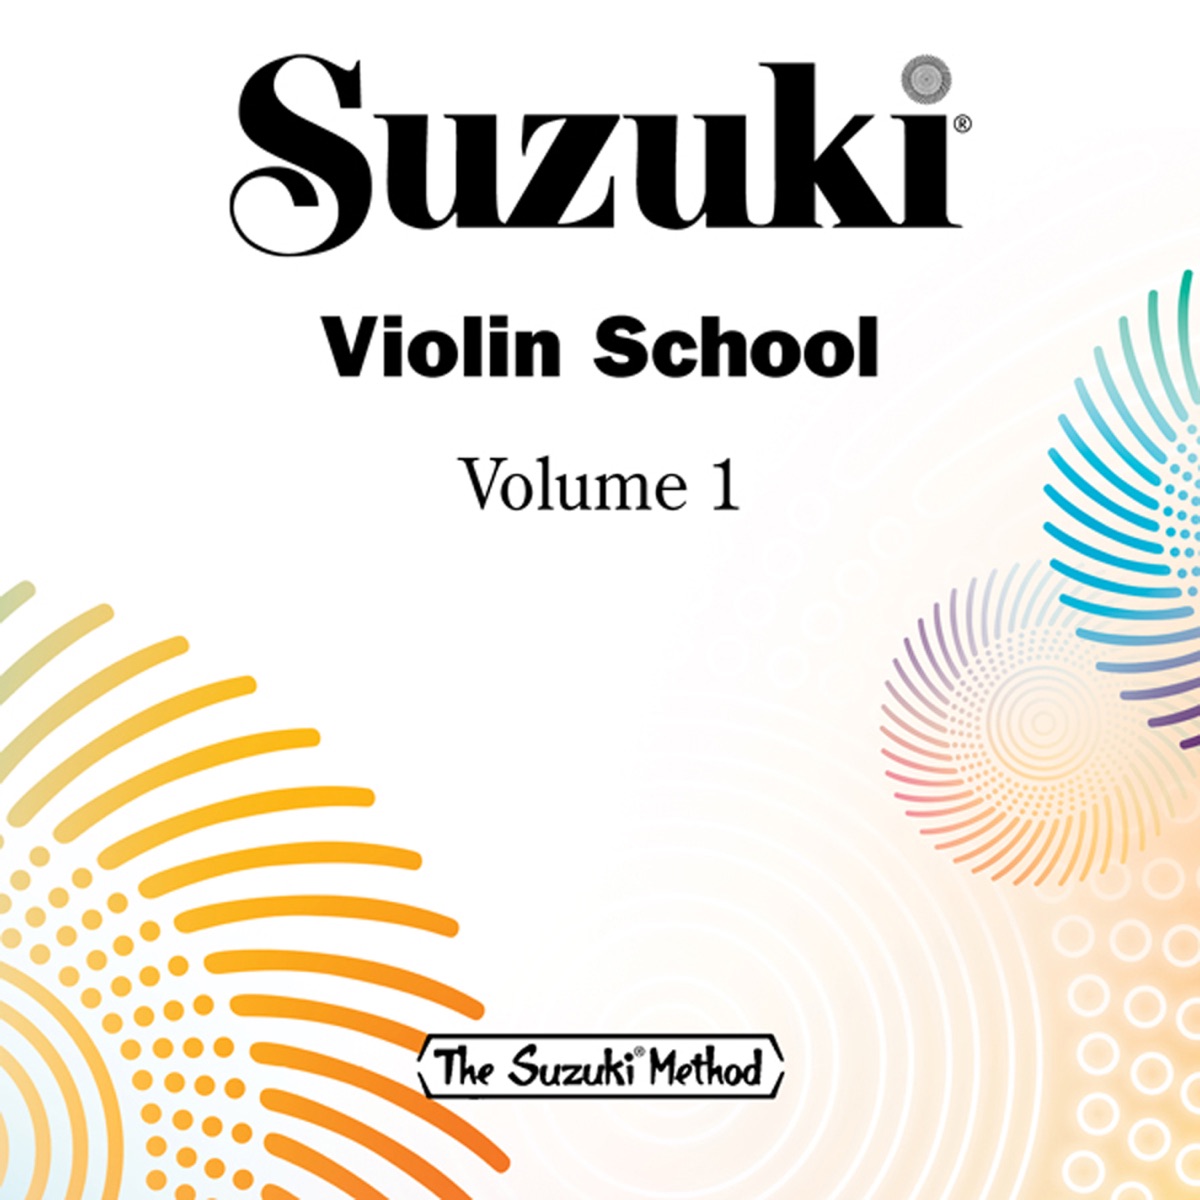 Suzuki Violin School, Vol. 1 by William Preucil on iTunes